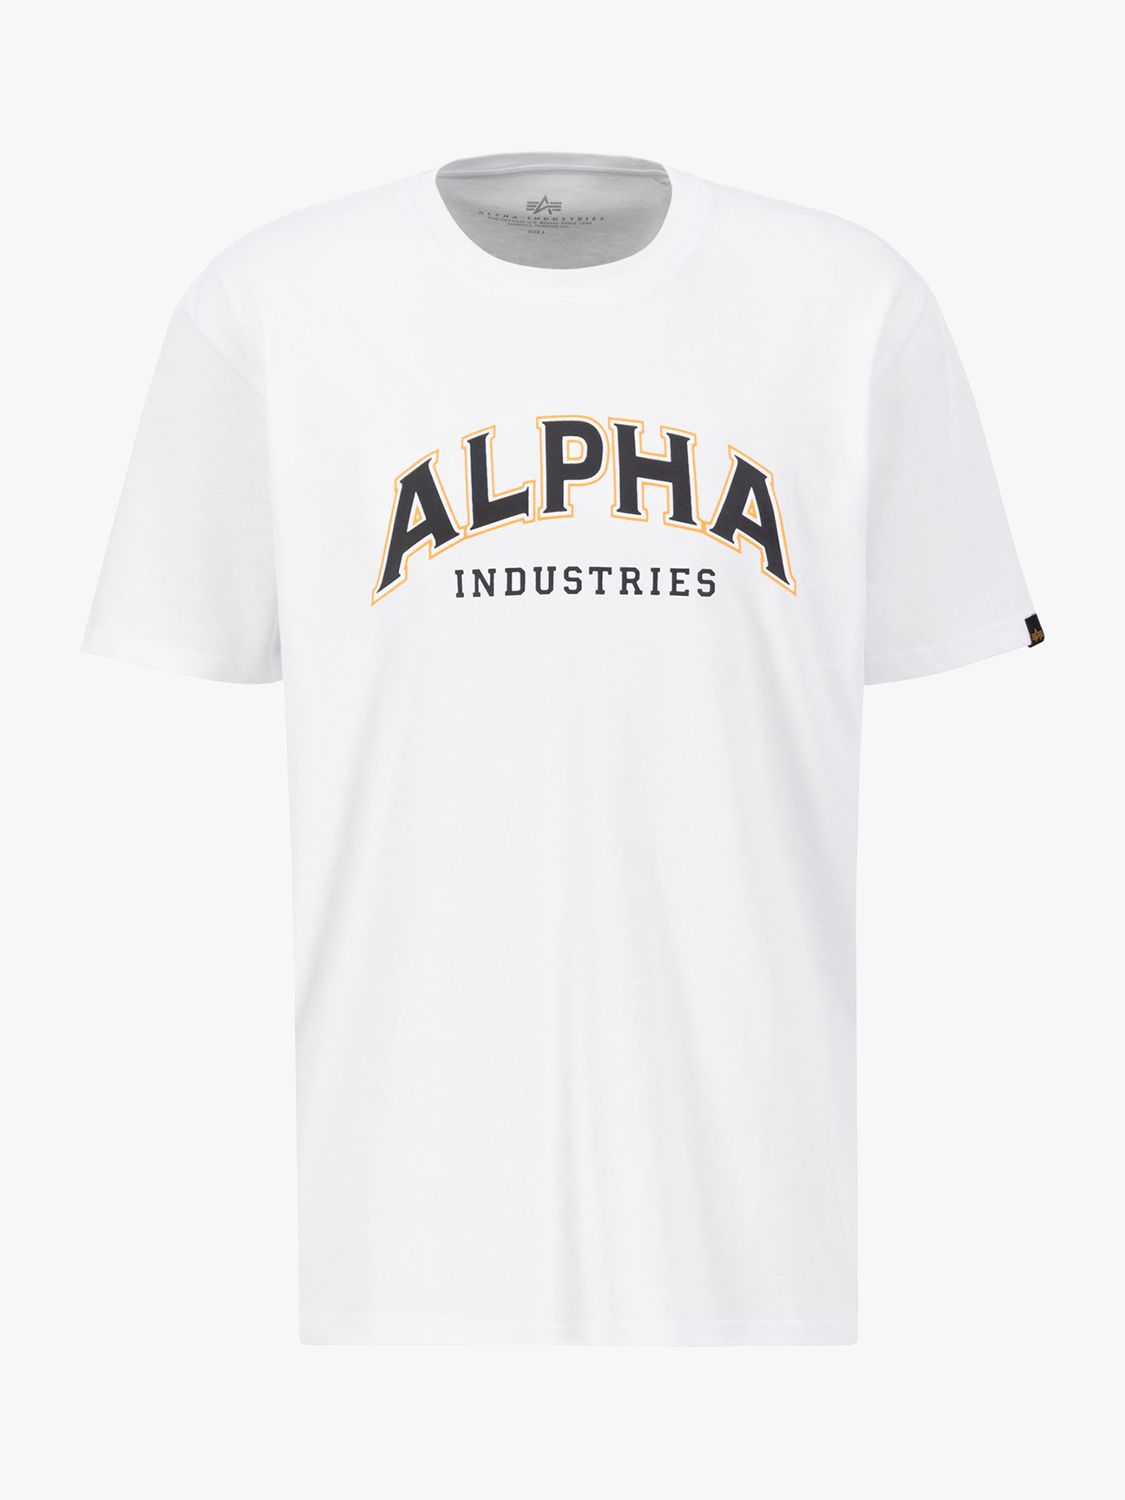 Alpha Industries College Logo Crew Neck T-Shirt, White, S